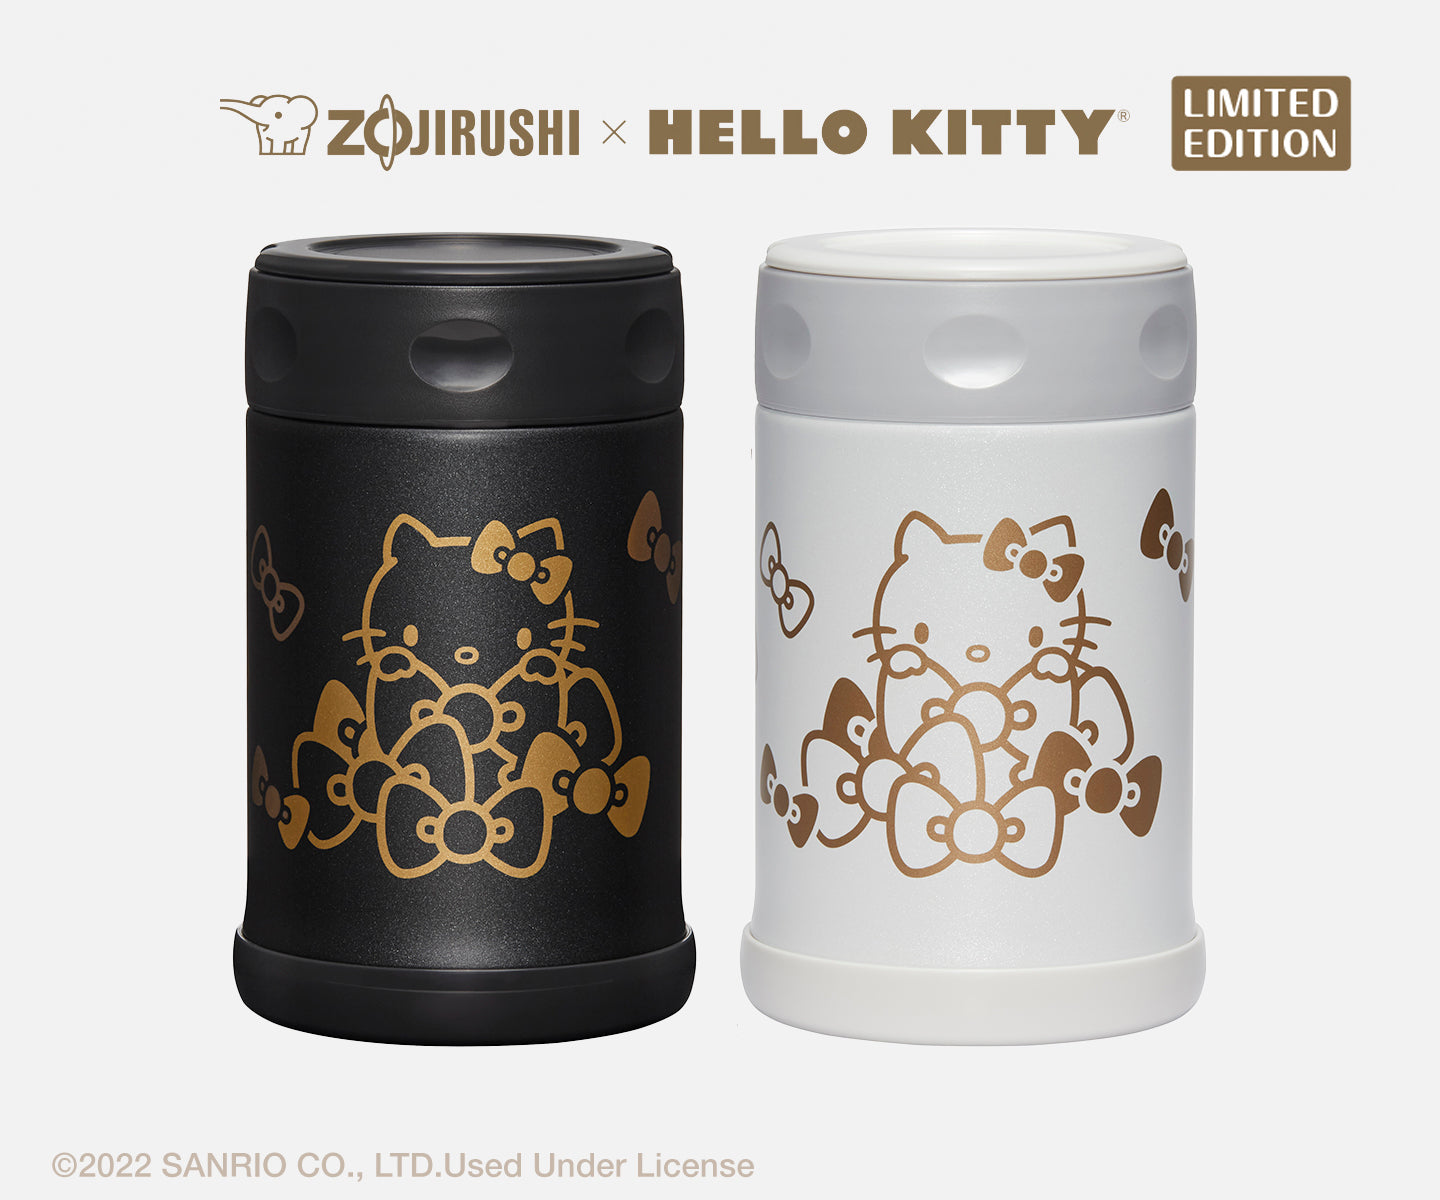 Zojirushi x Hello Kitty Stainless Steel Food Jar